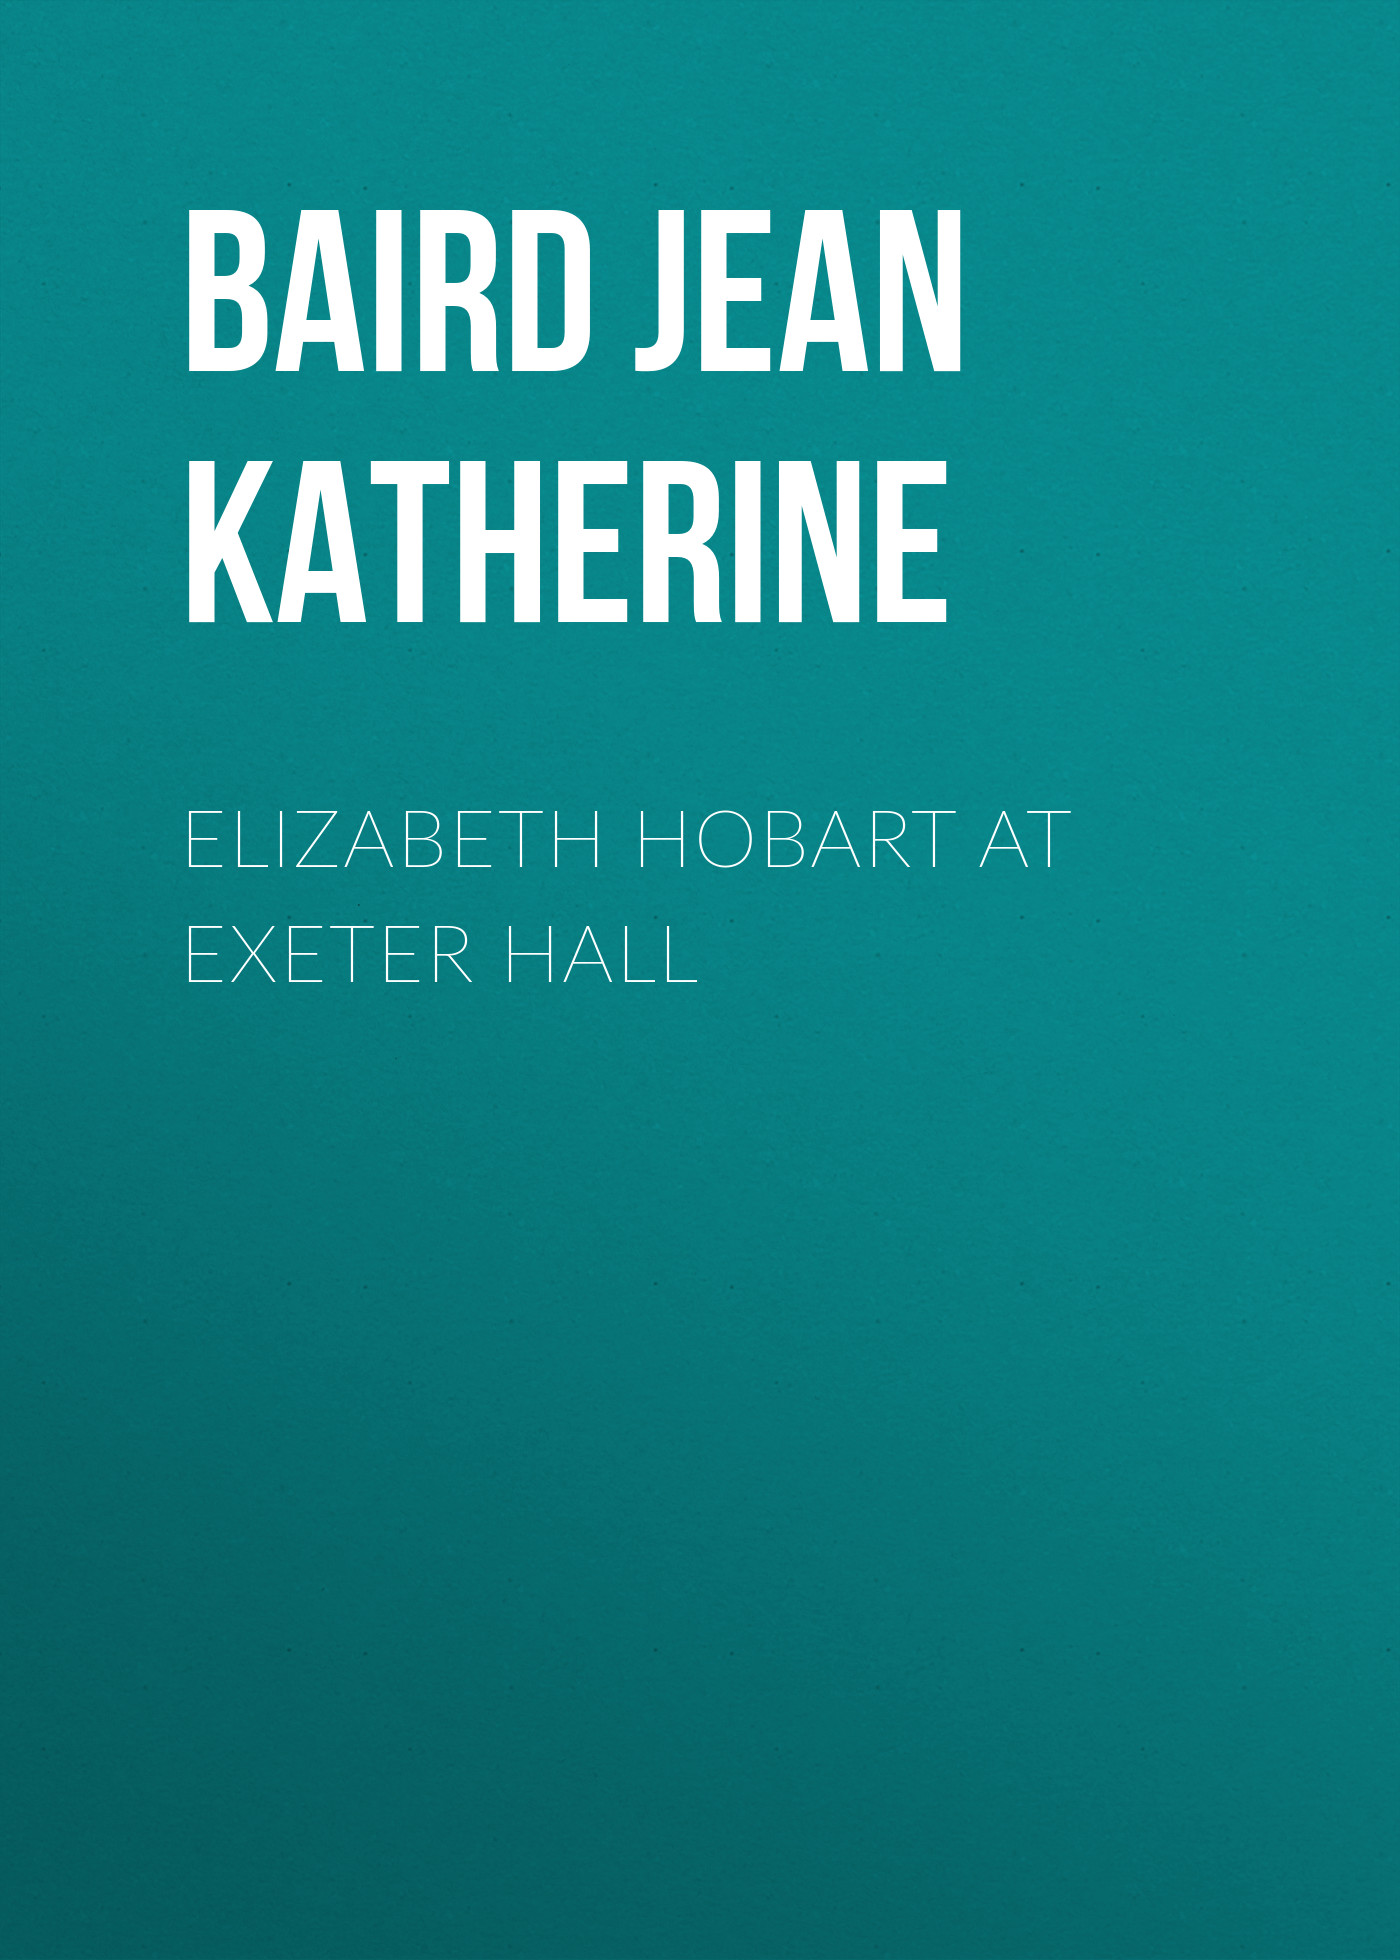 Baird Jean Katherine Elizabeth Hobart at Exeter Hall